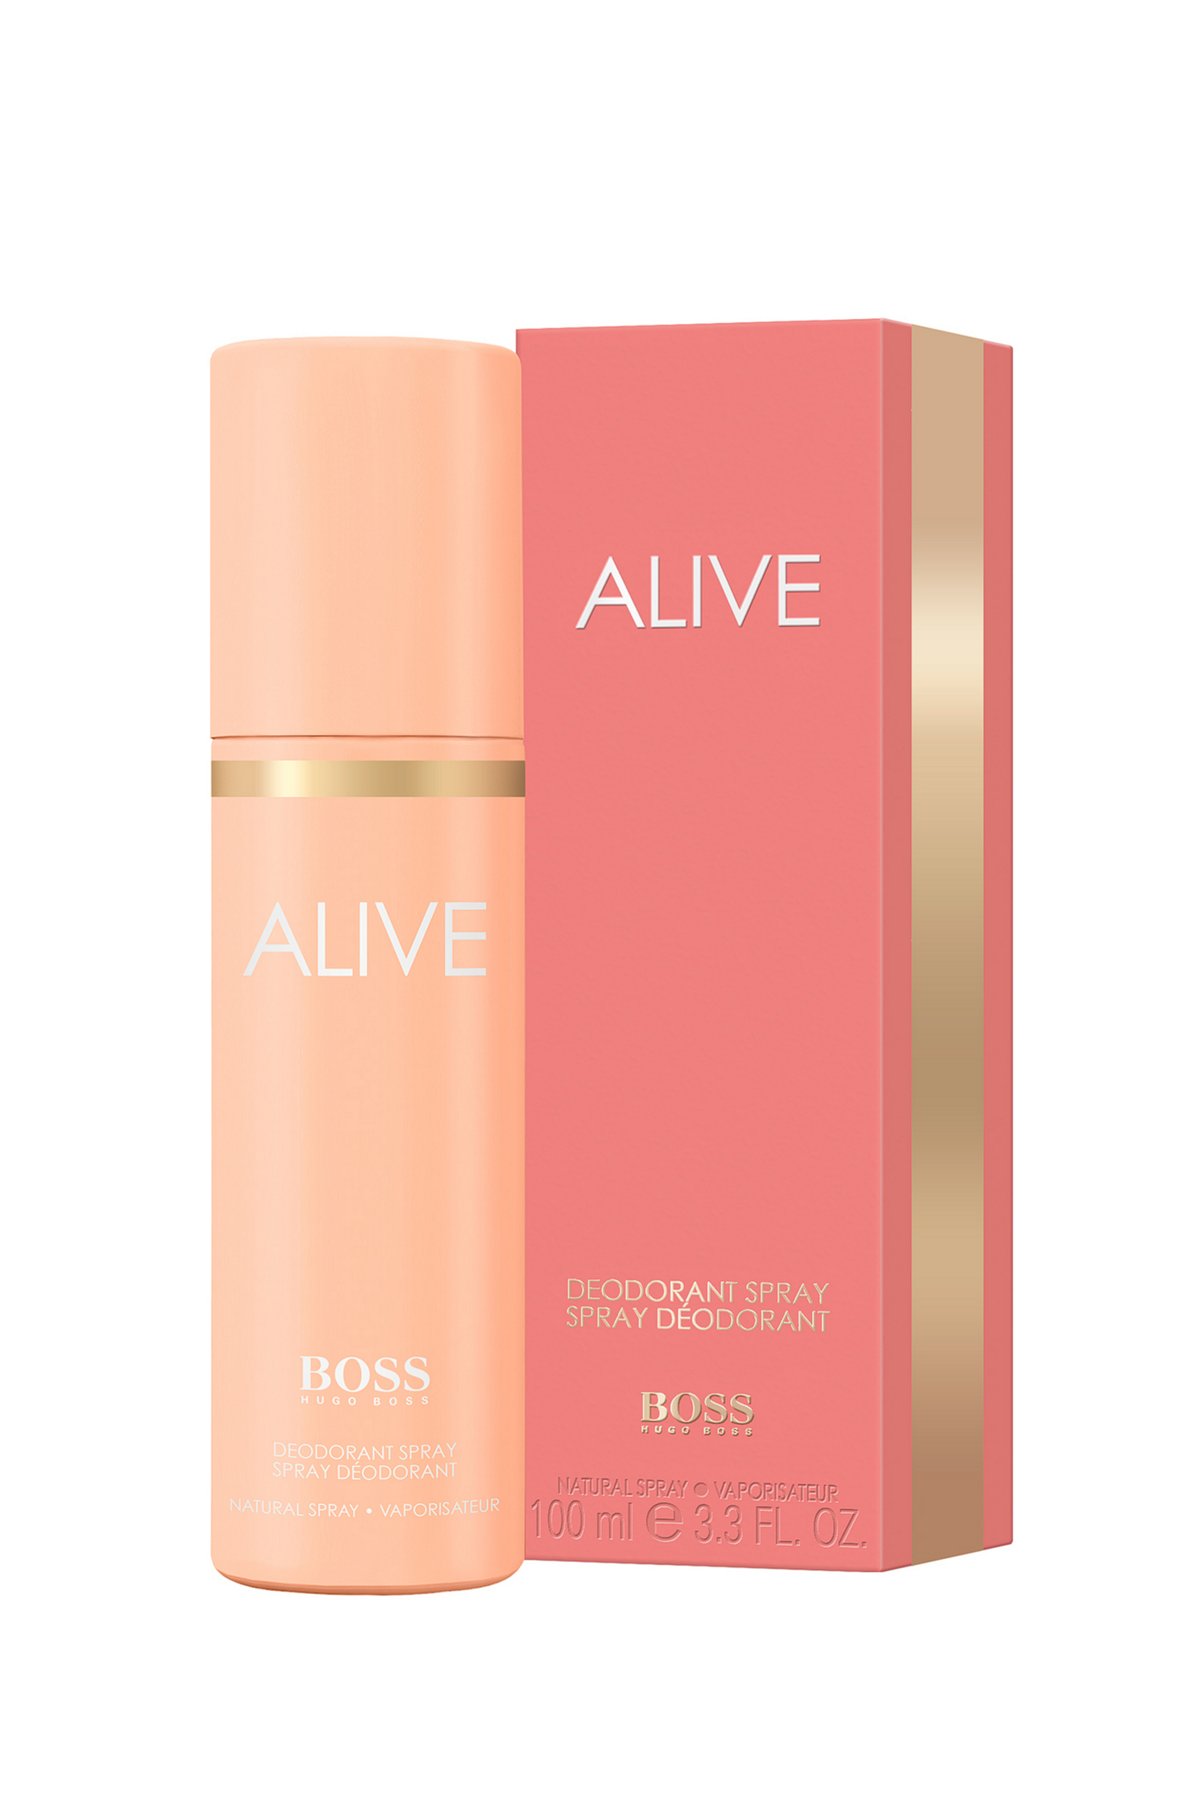 Deodorante spray BOSS Alive 100 ml, Rosa chiaro